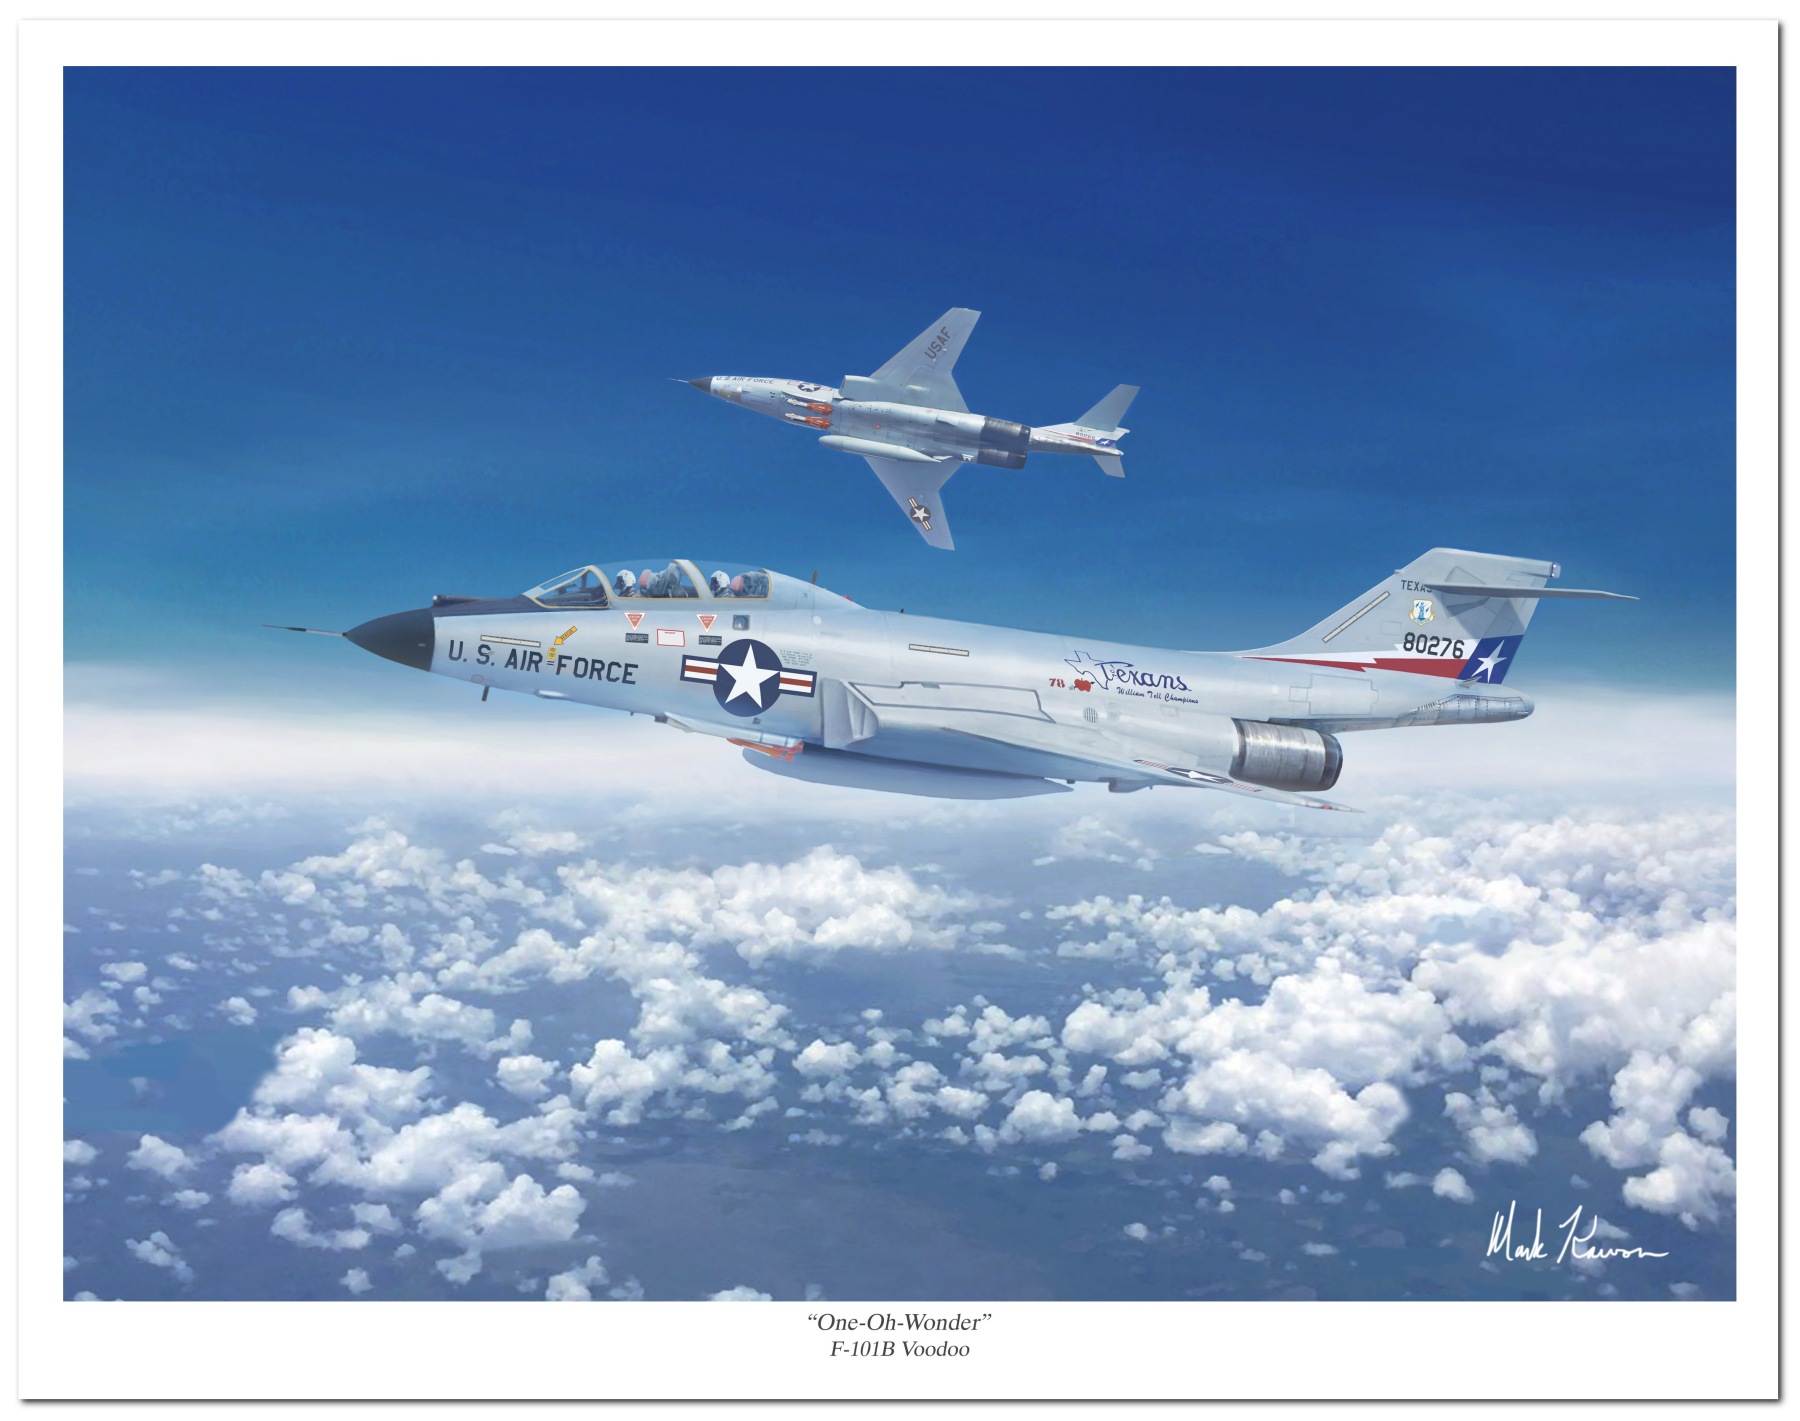 "One Oh Wonder" by Mark Karvon featuring the USAF F-101B Voodoo